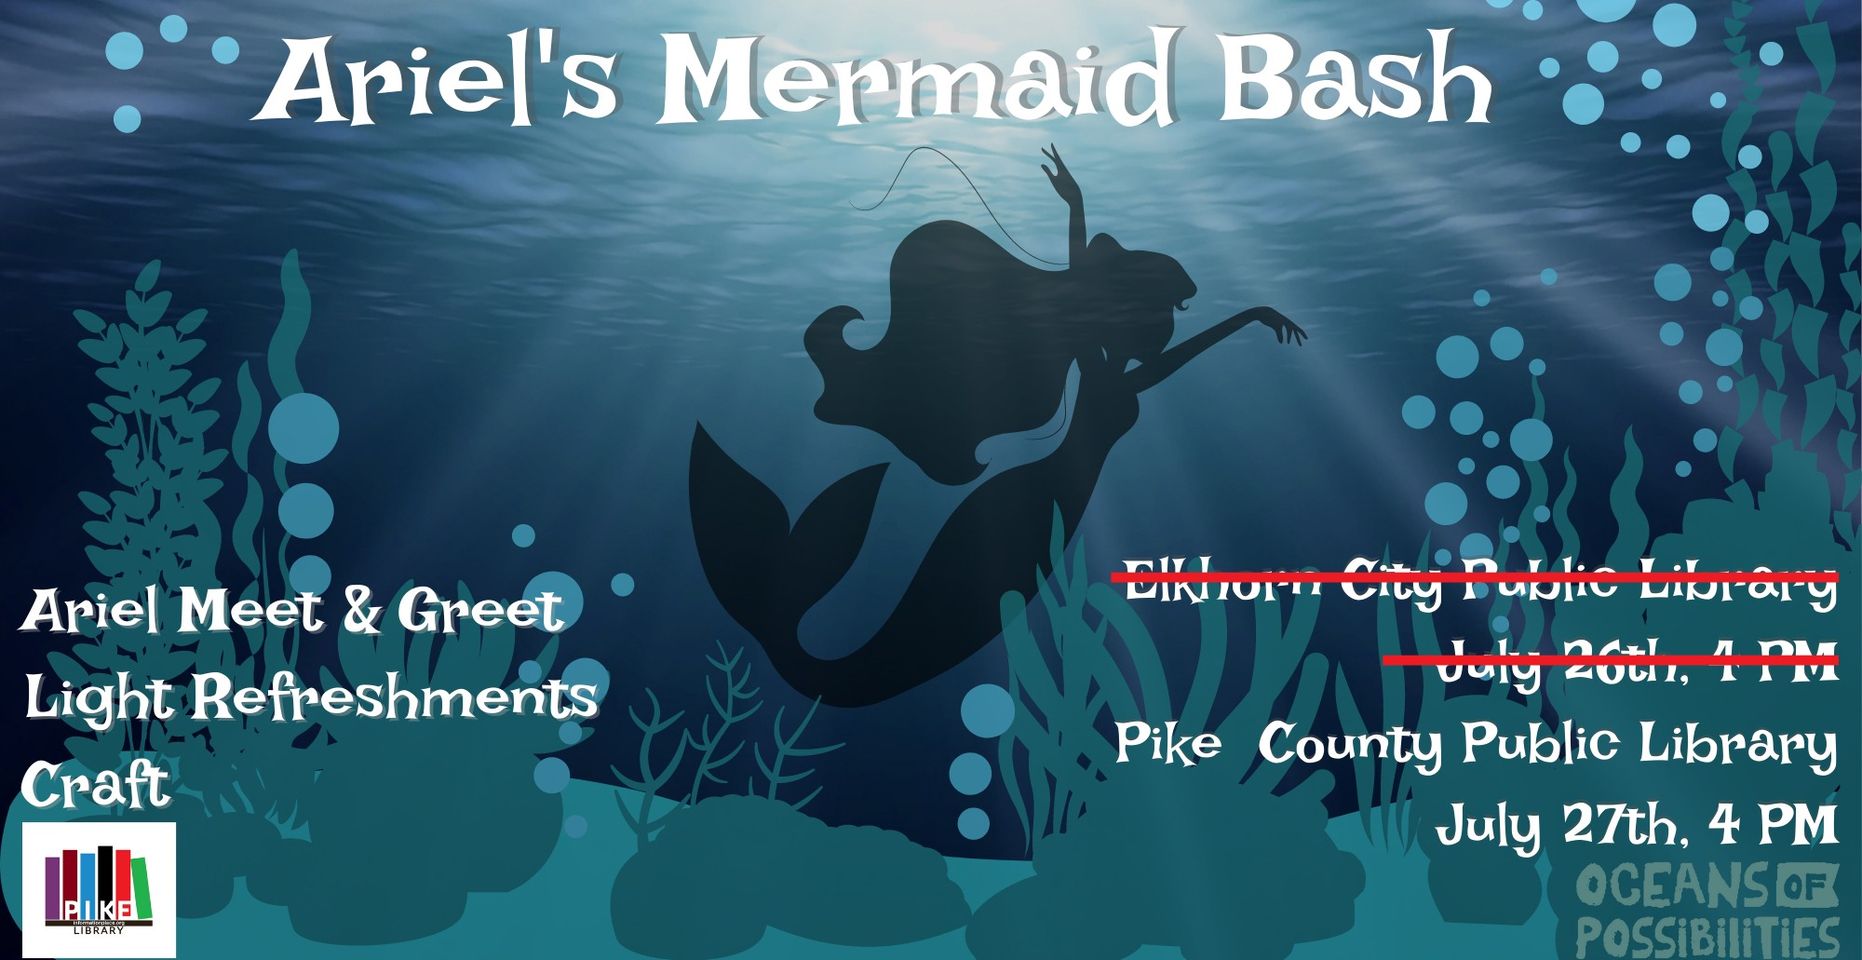 Ariel's Mermaid Bash